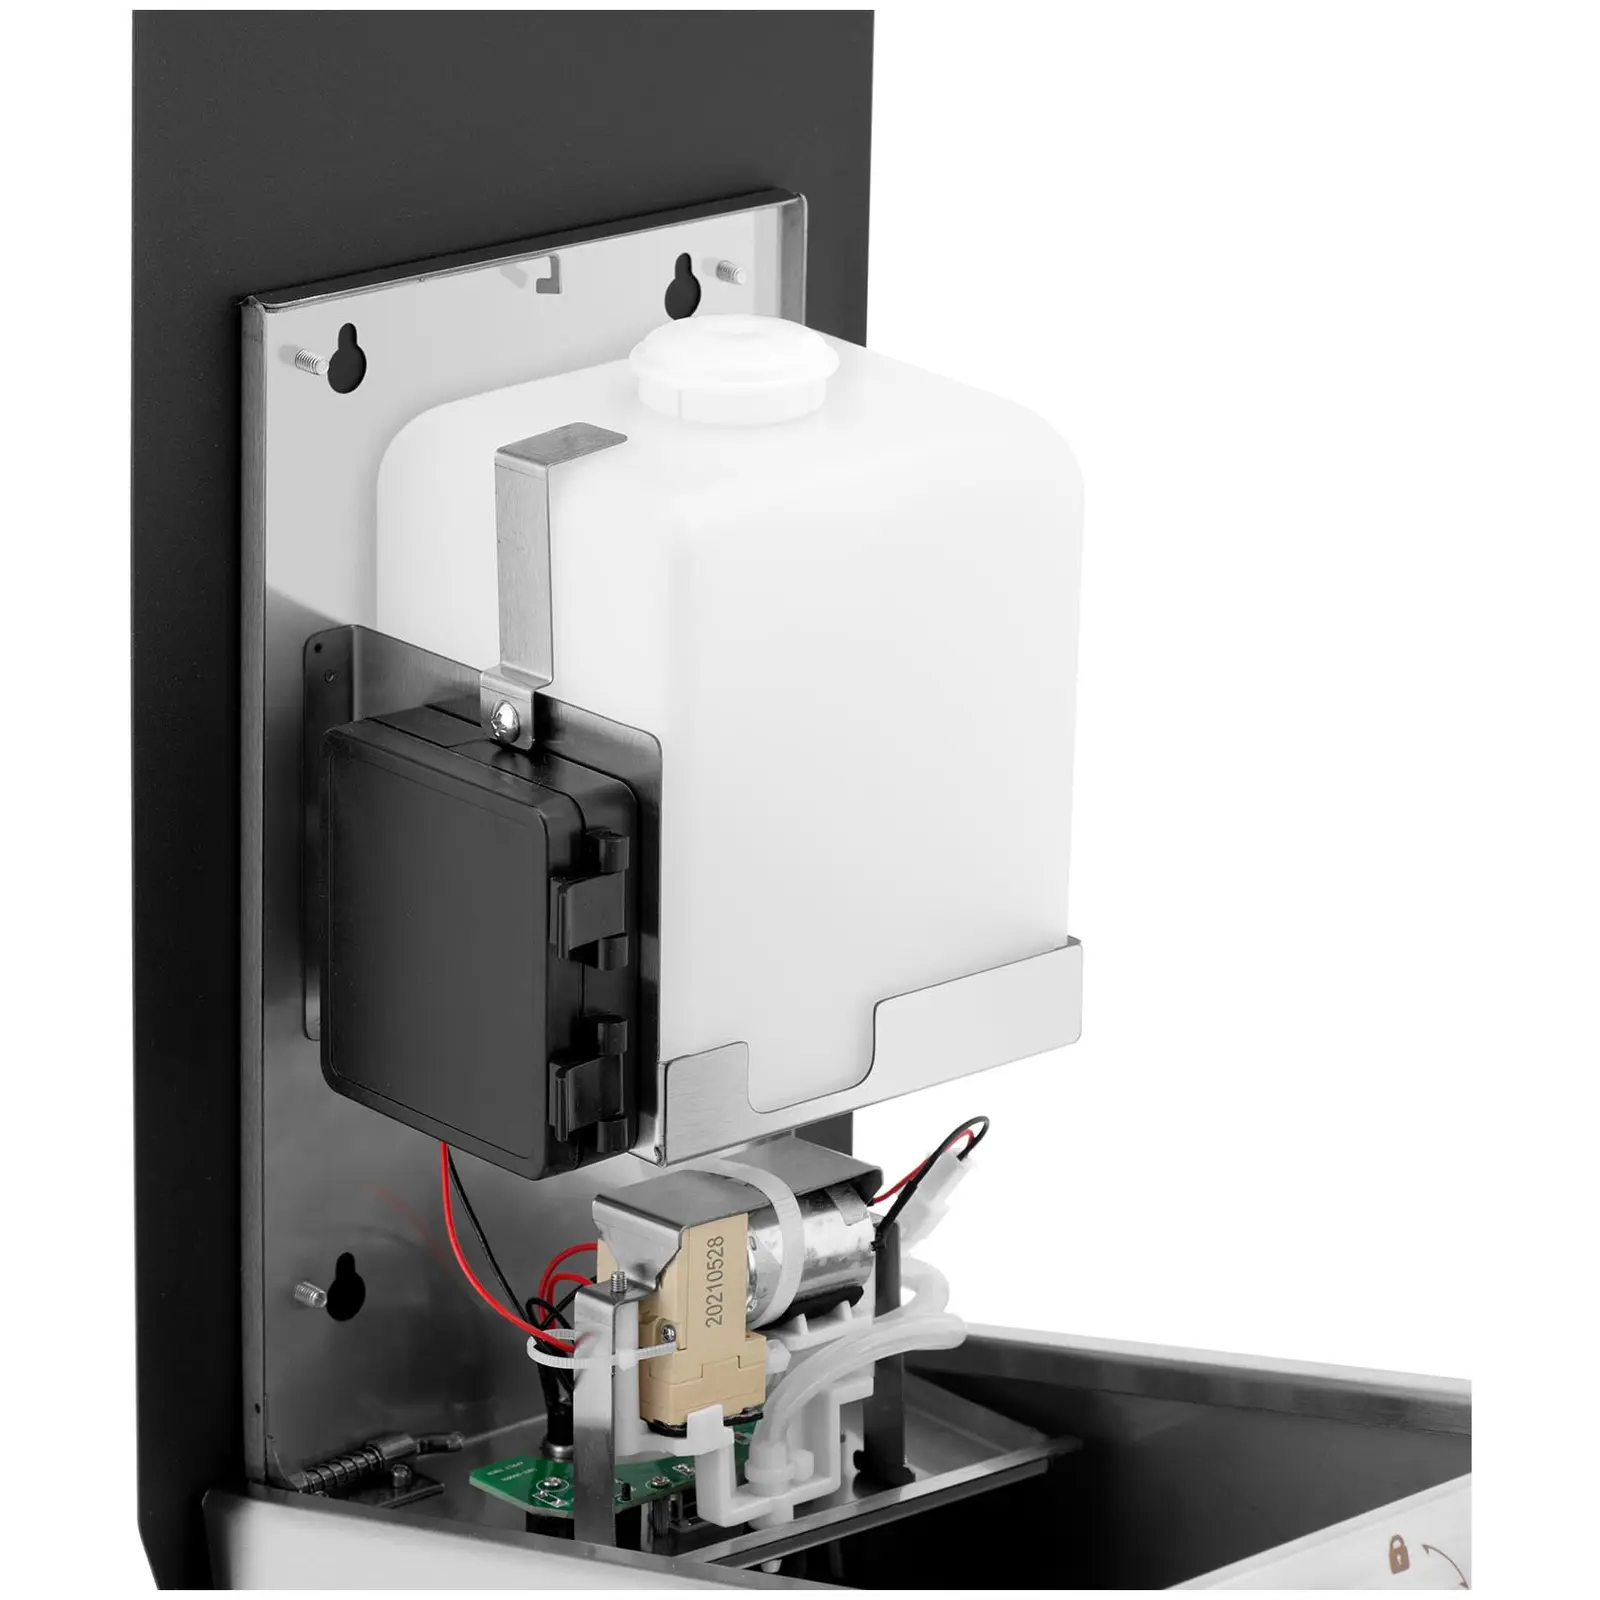 Factory second Hand Sanitiser Dispenser - 1 L - base - Stainless steel, acrylic, steel base - square